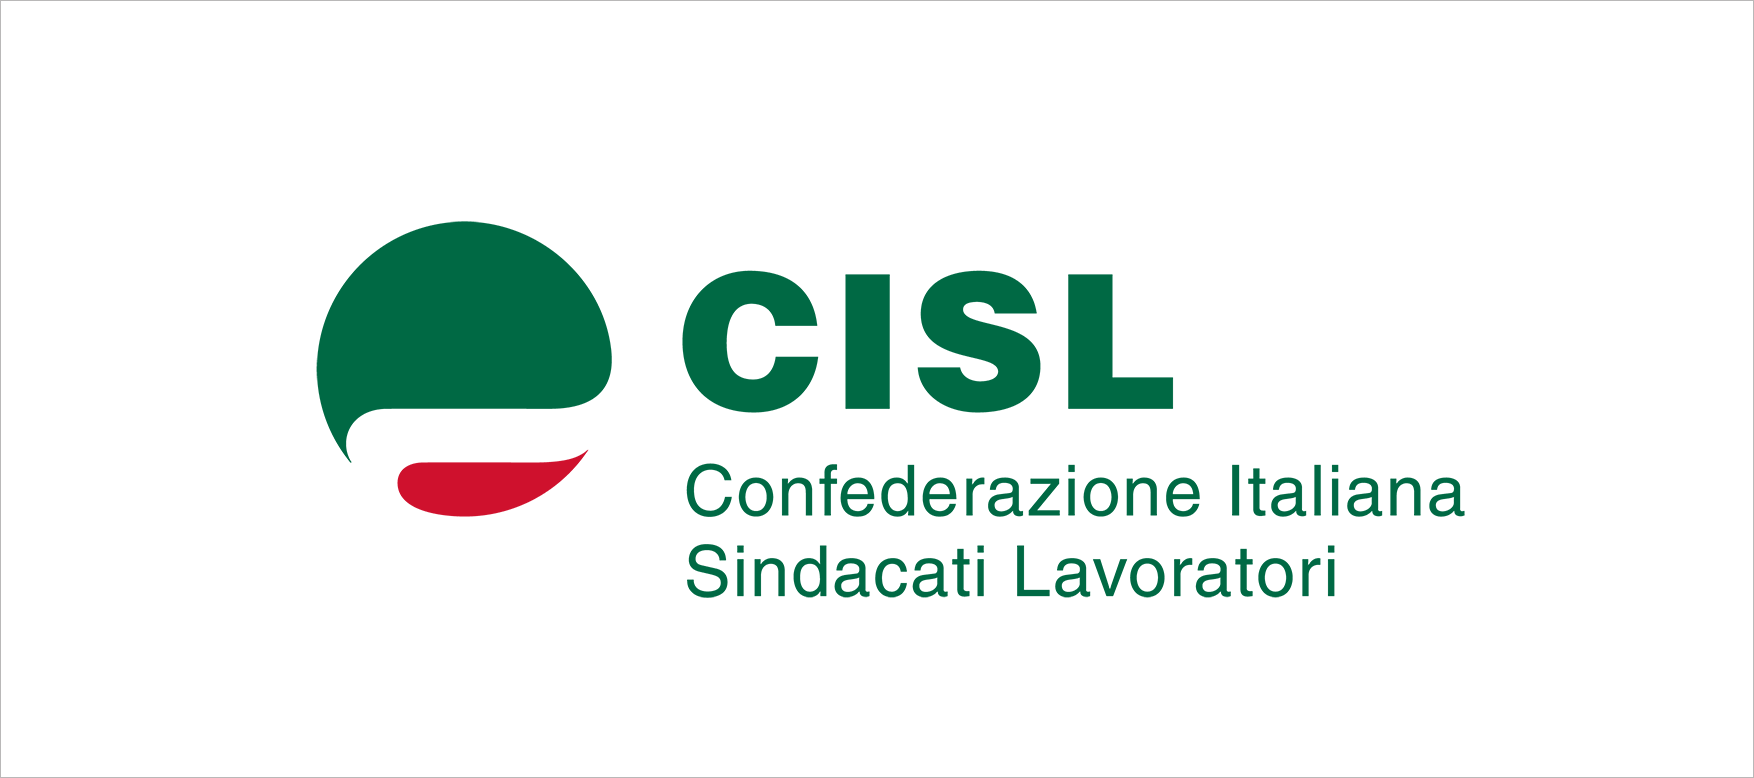 CISL logo